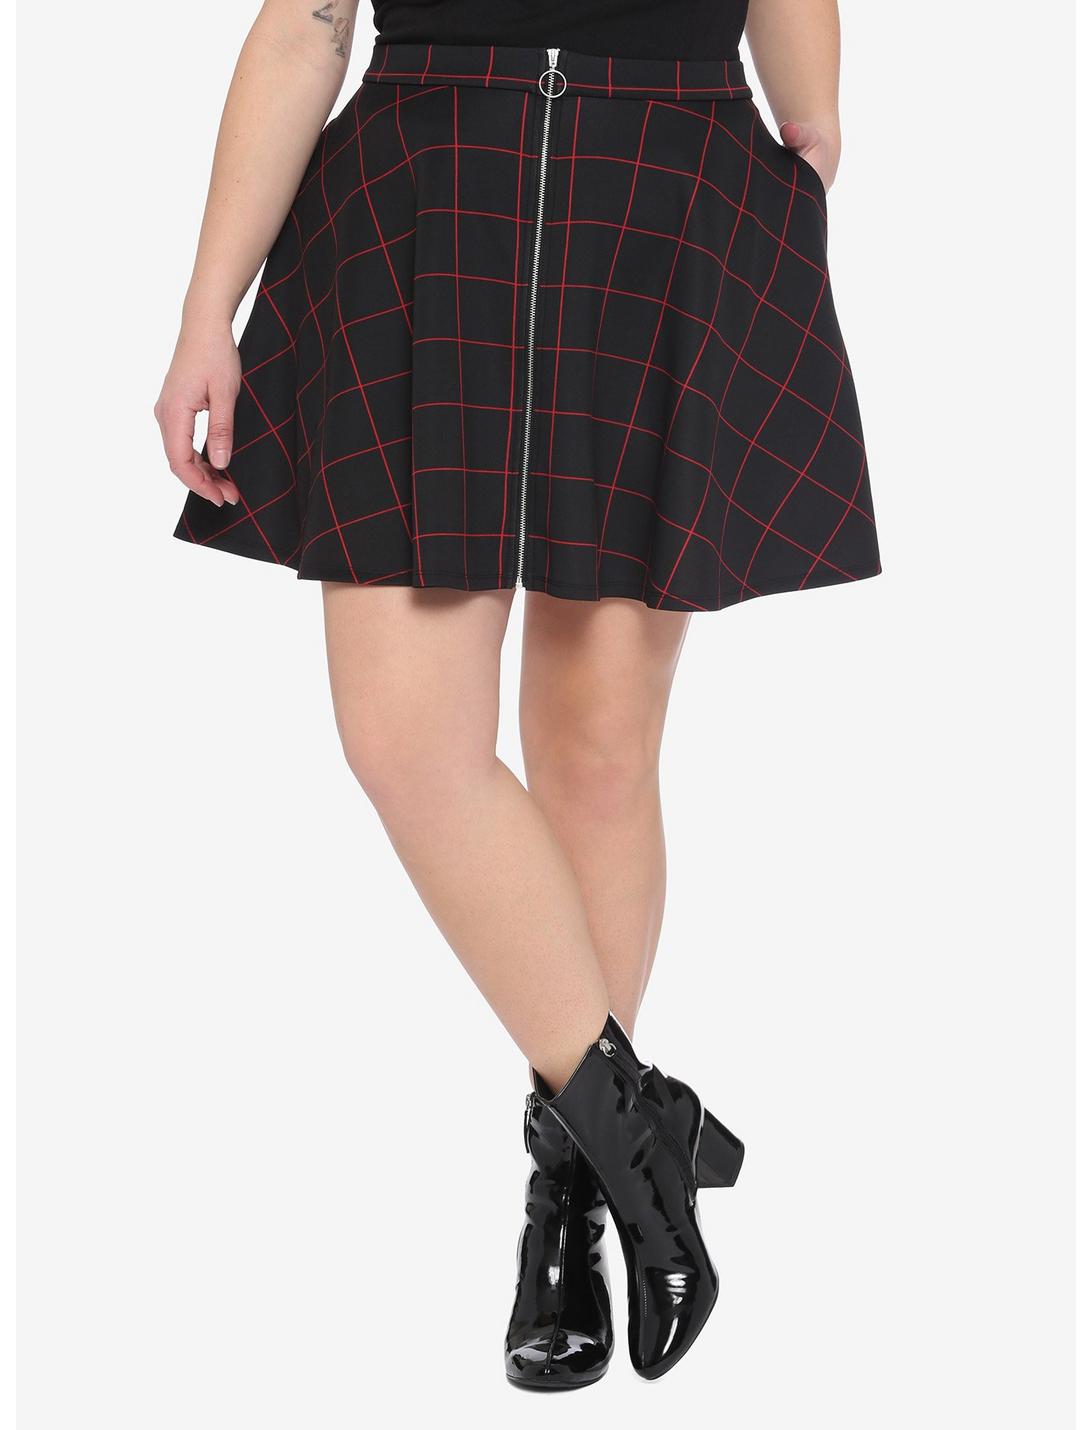 Black & Red Grid O-Ring Skater Skirt Plus Size | Hot Topic